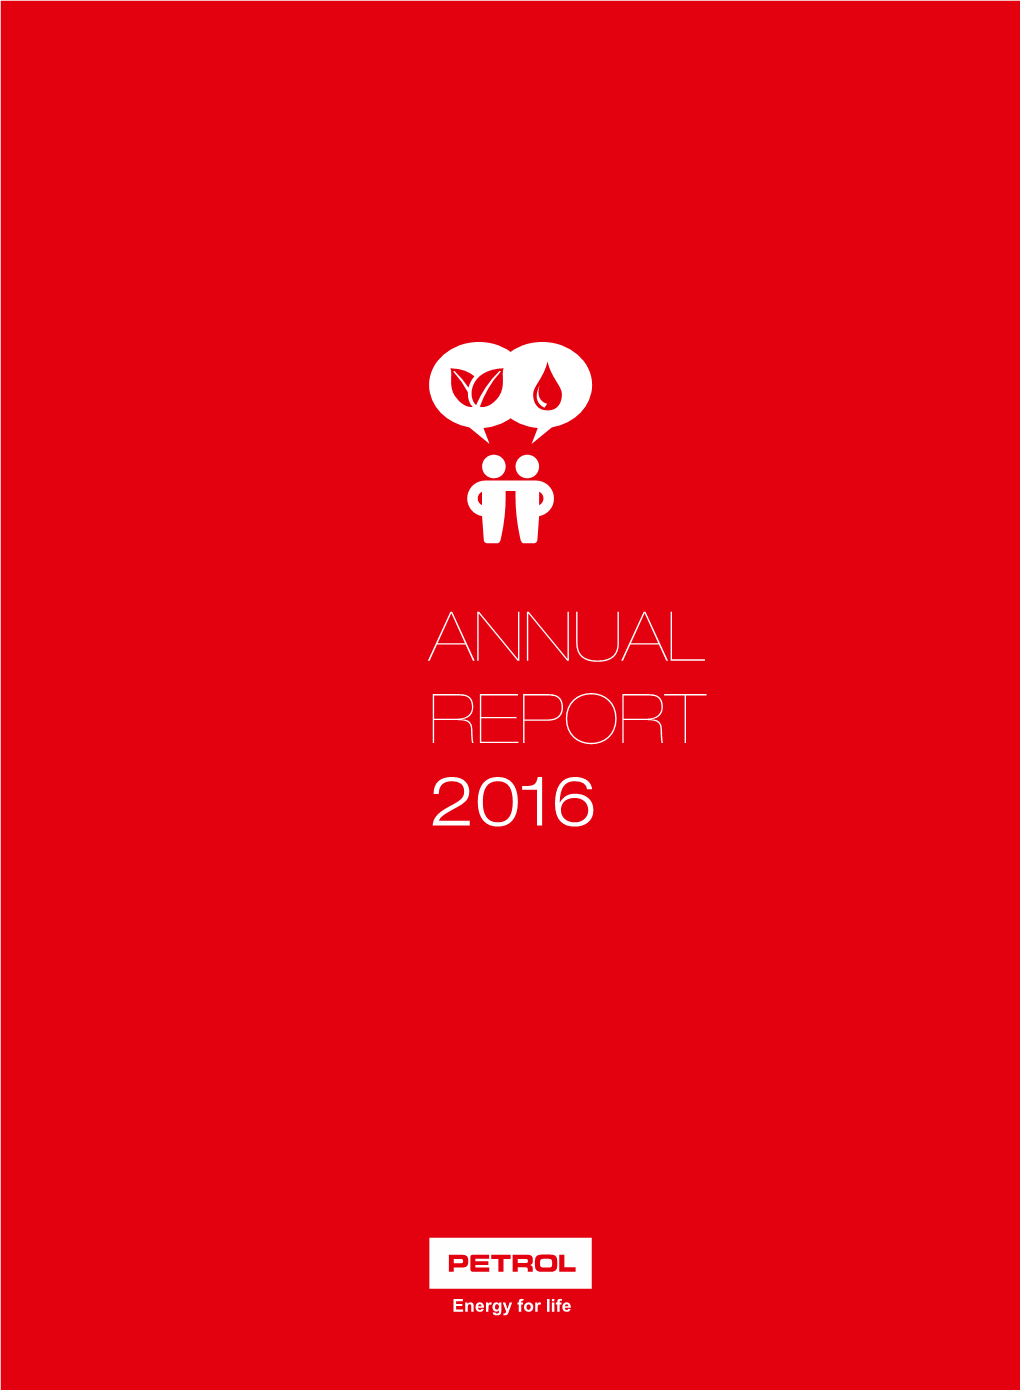 Annual Report Petrol 2016